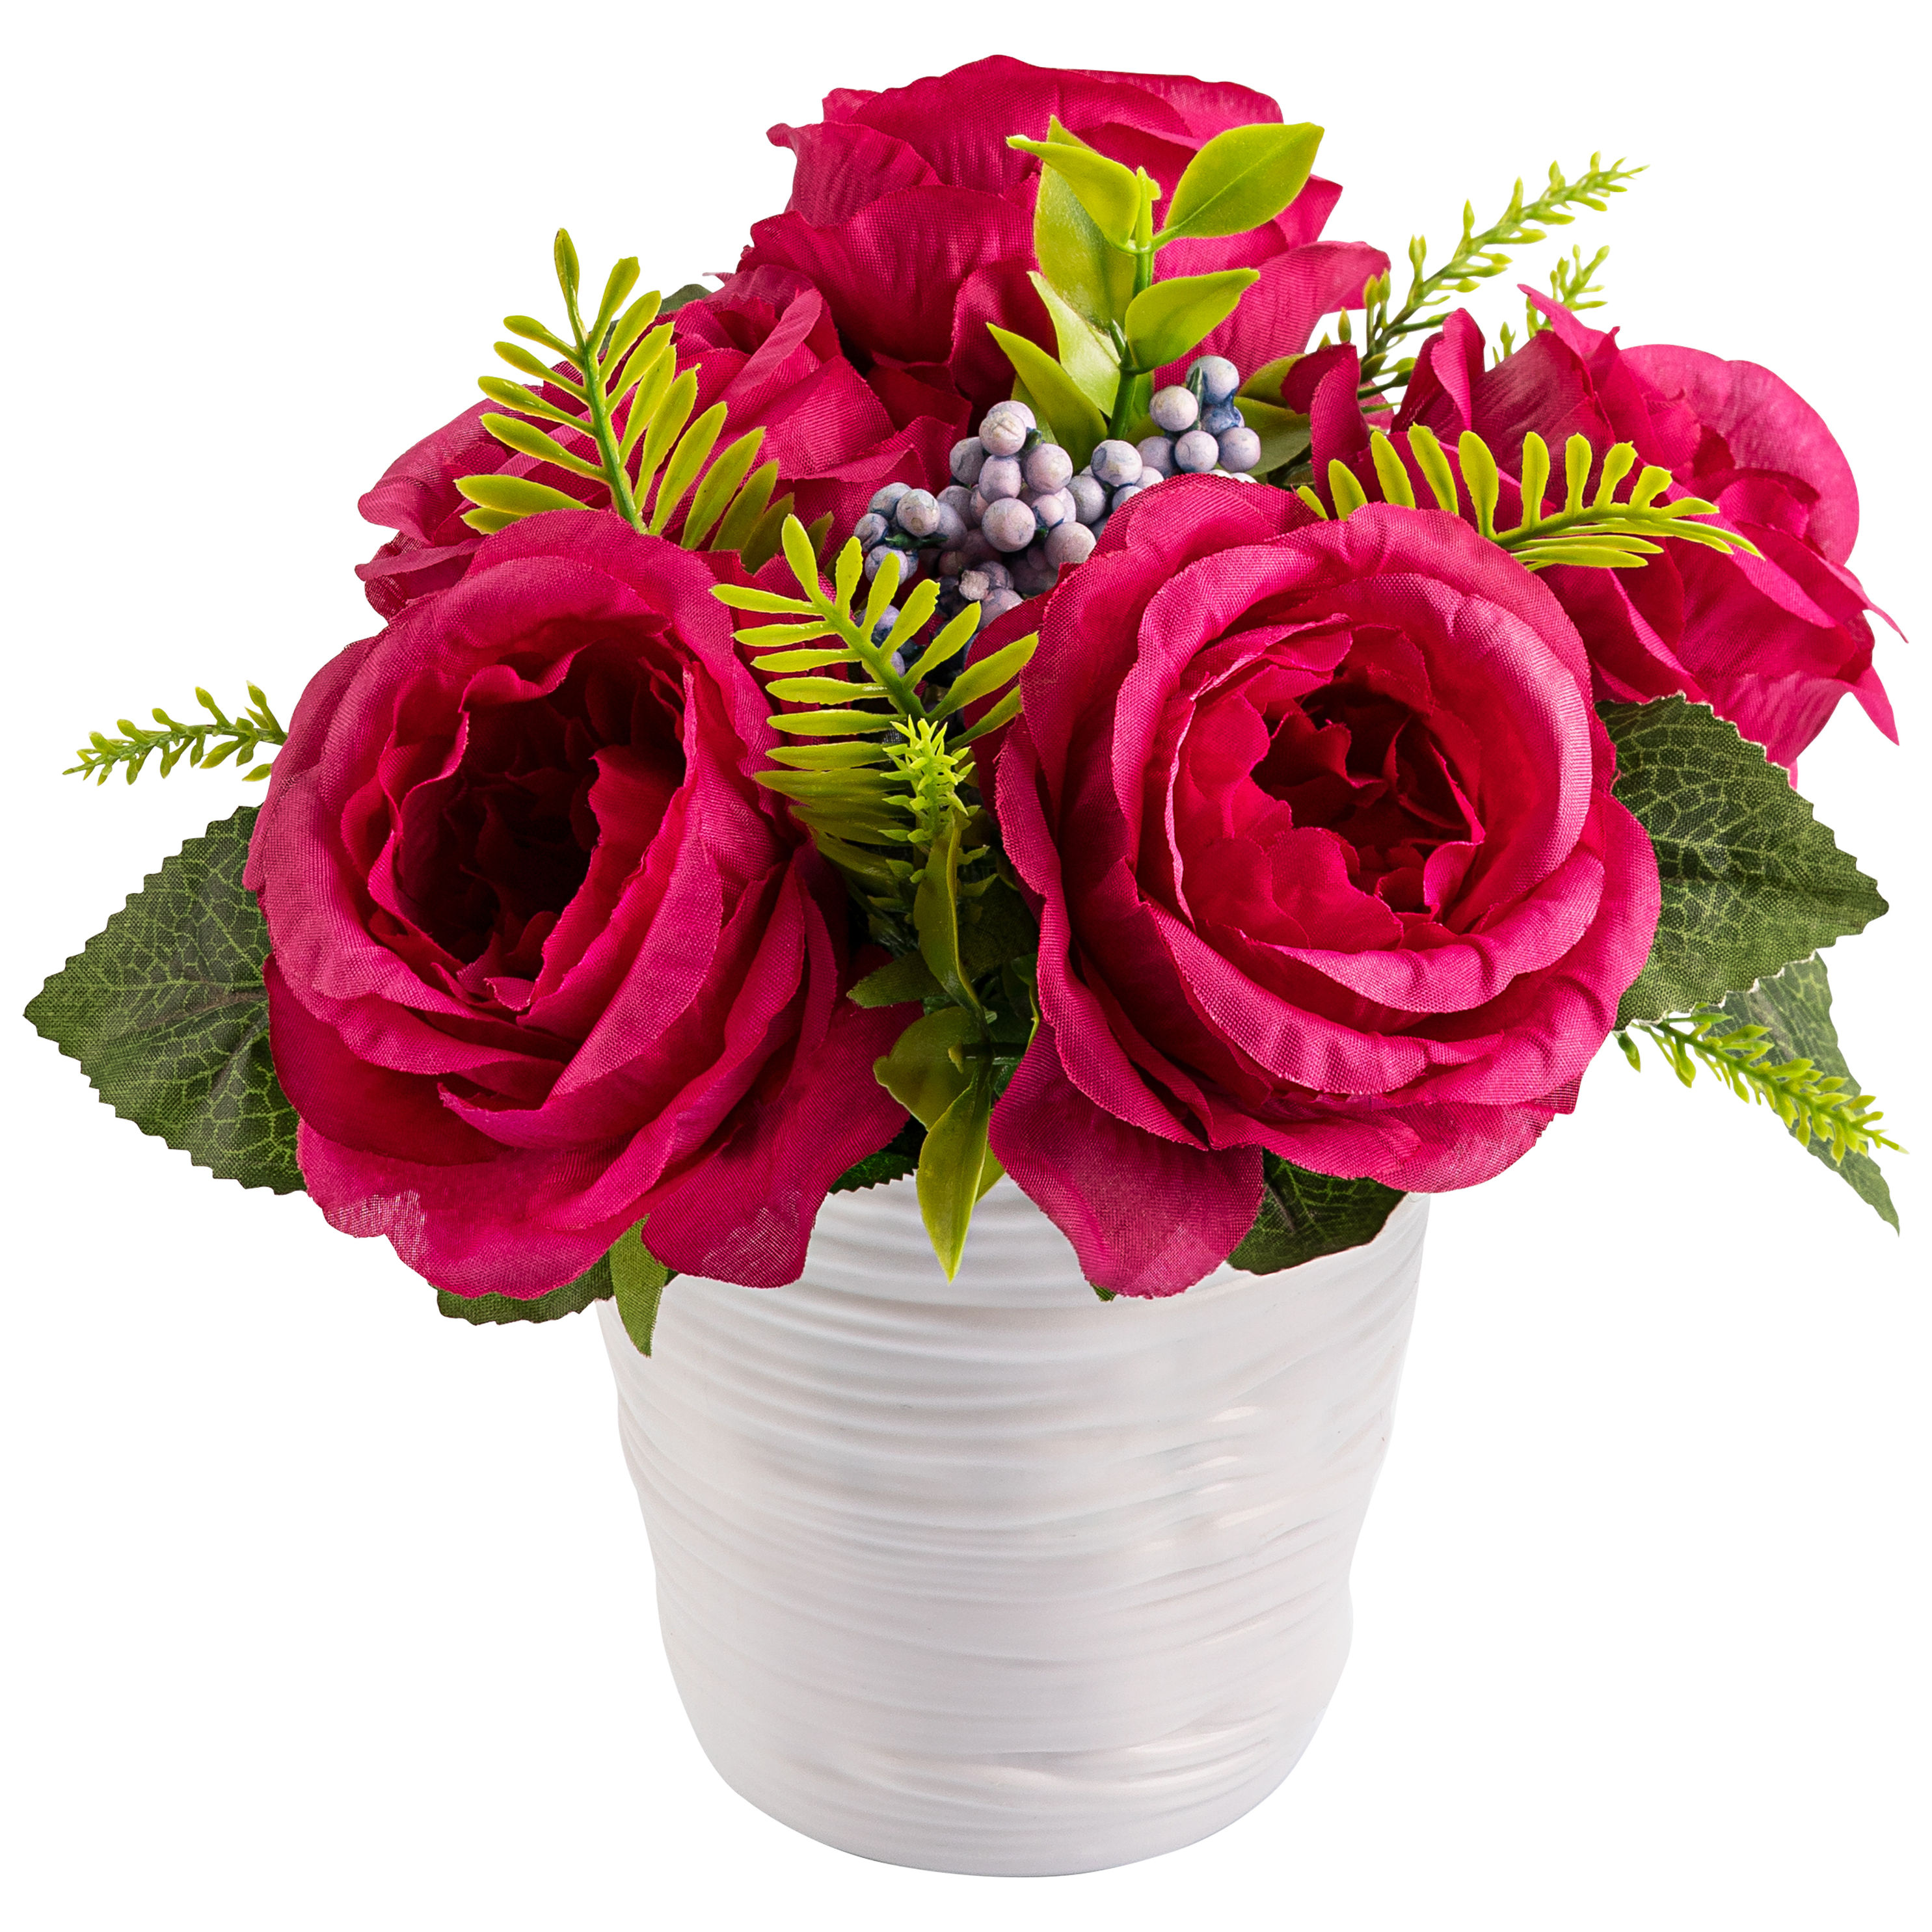 Kunstblumen Bouquet Rosen jetzt bestellen bei Weltbild.de